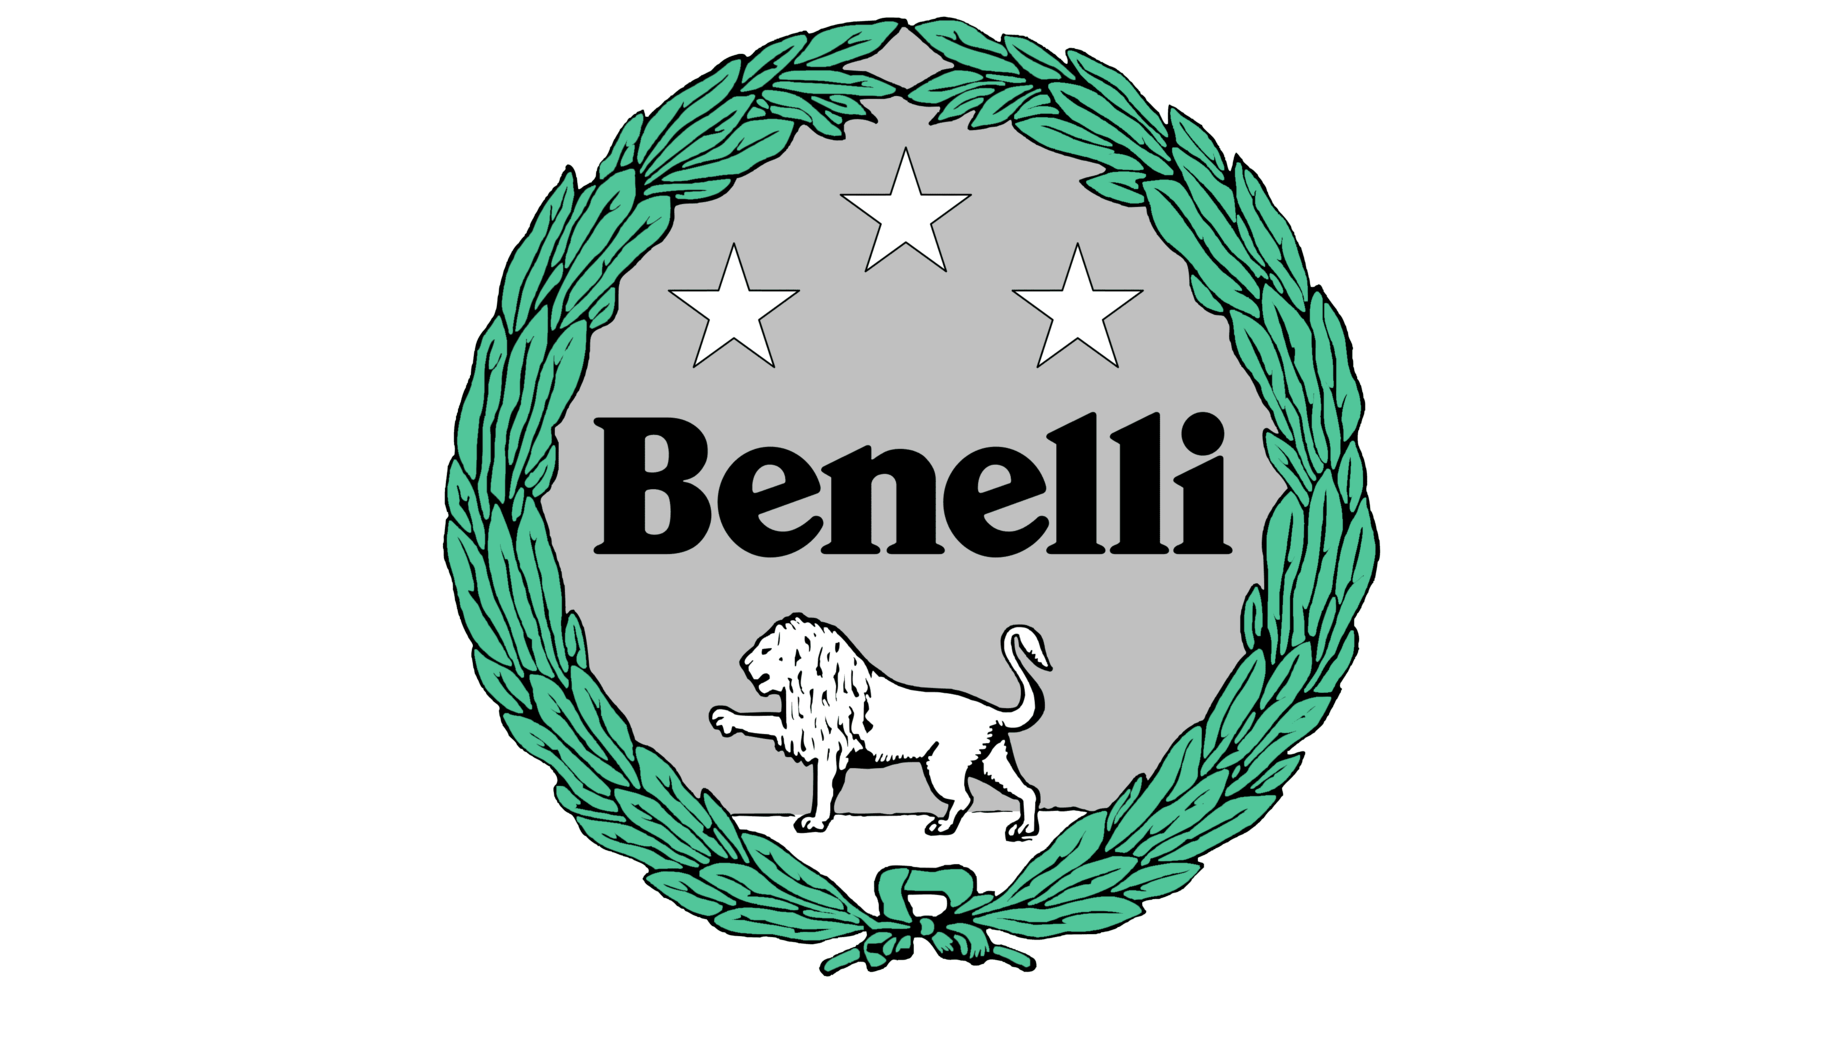 Benelli sign